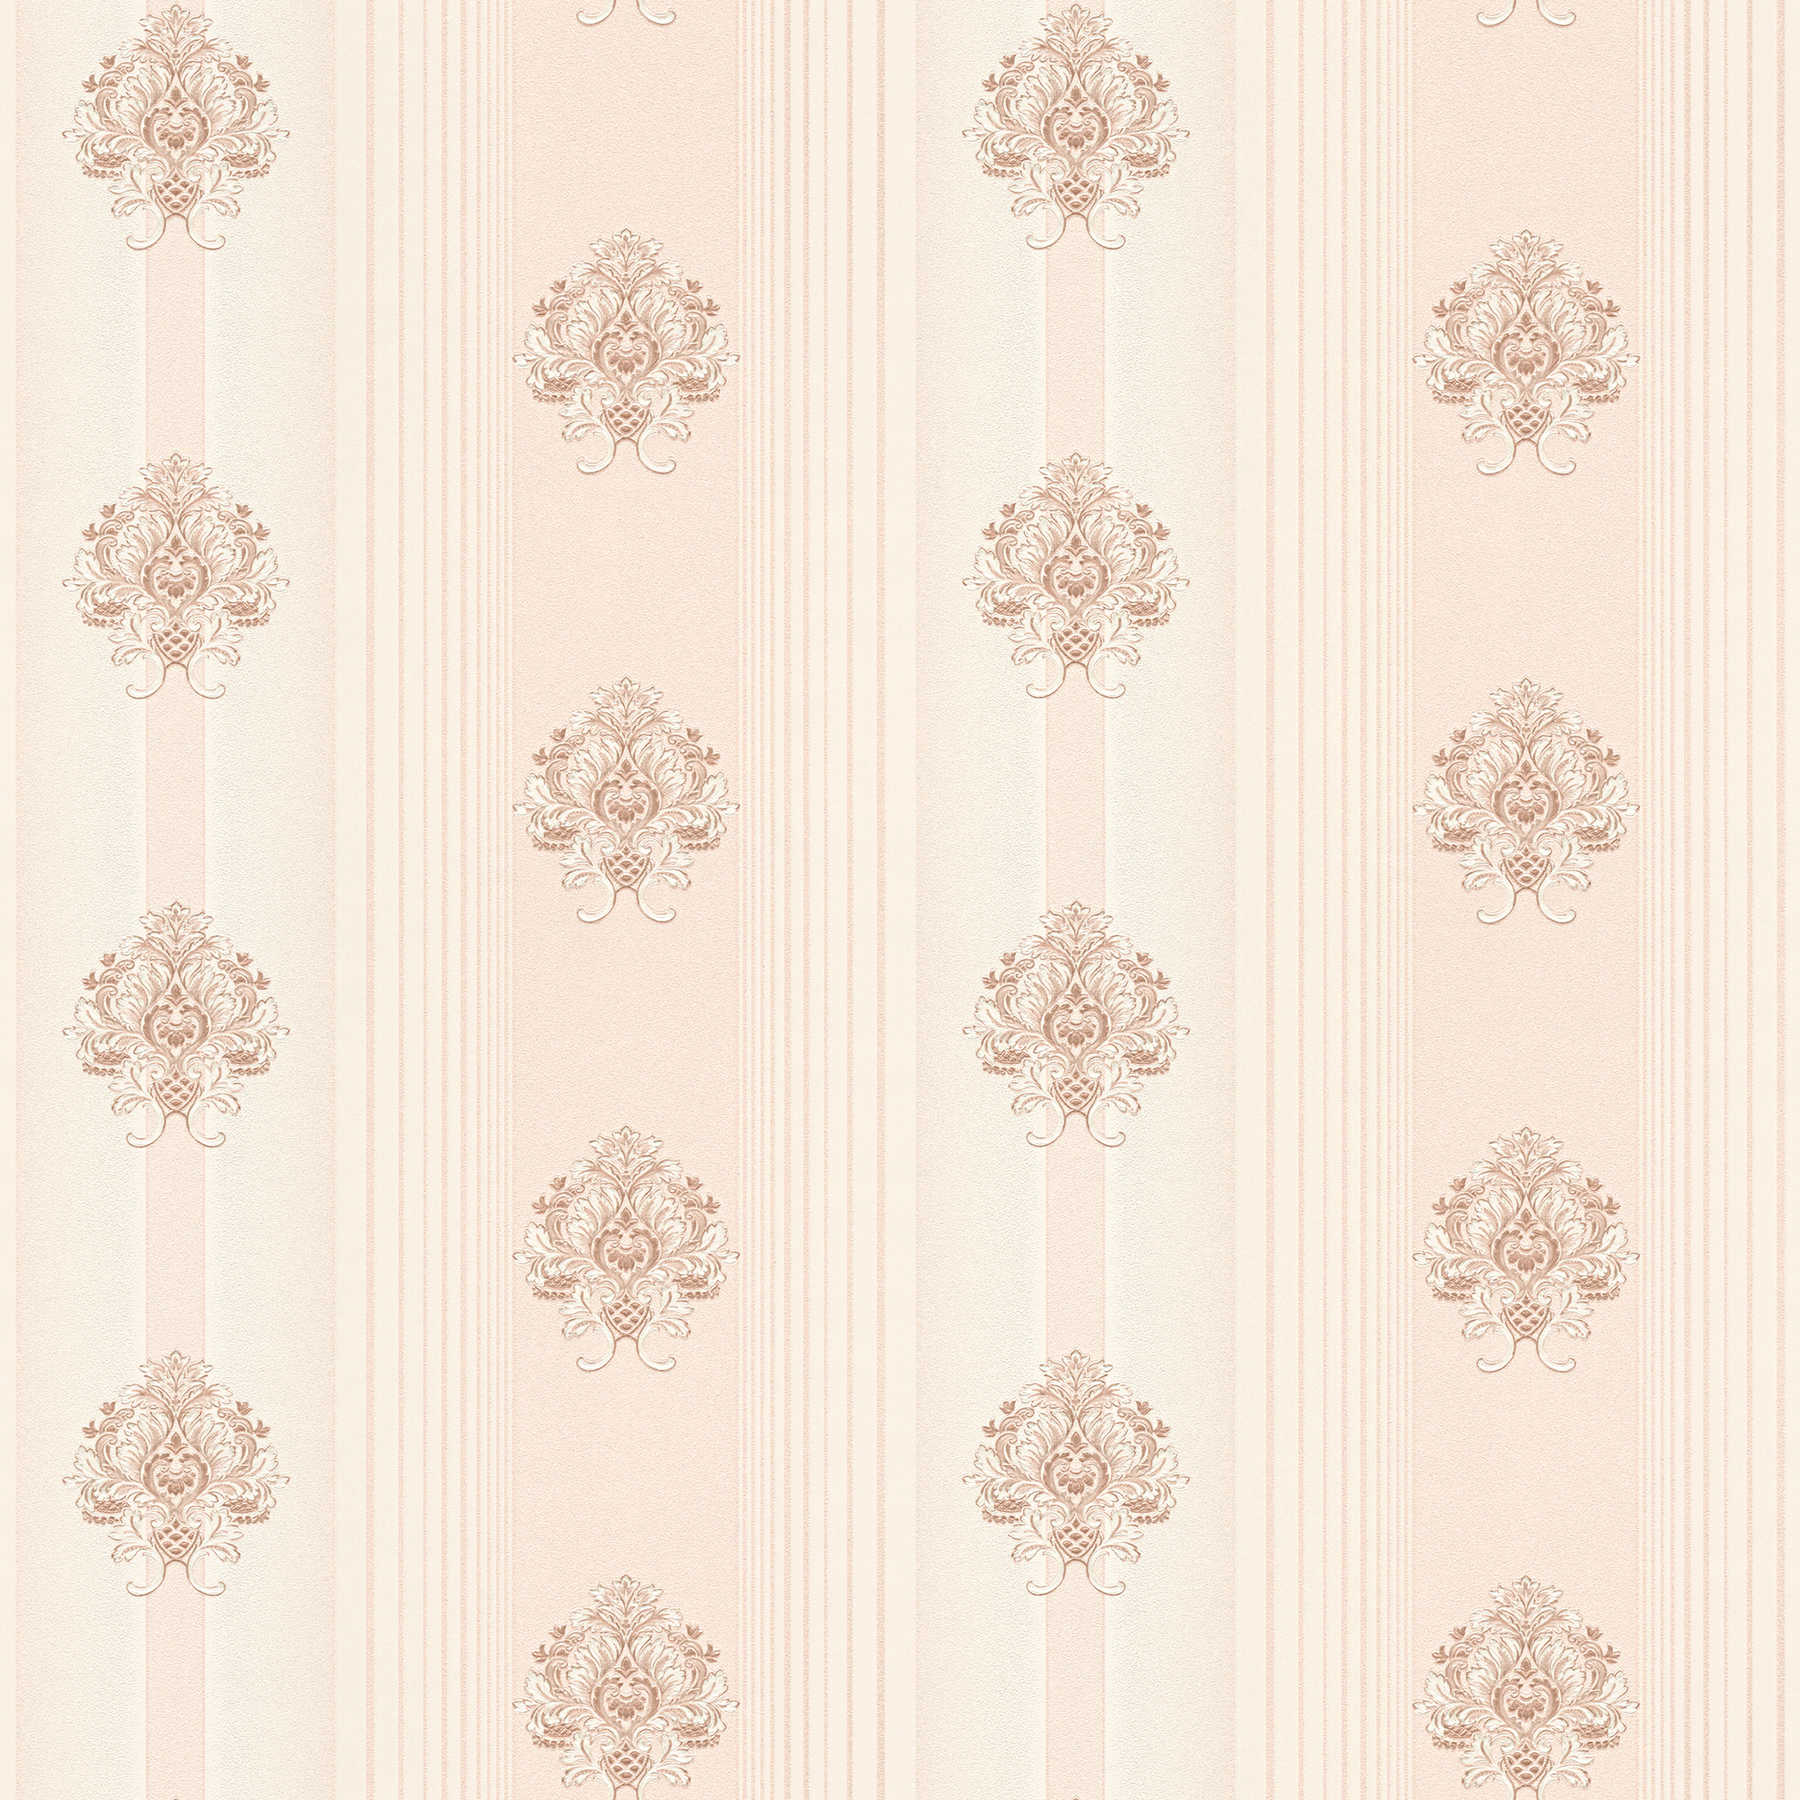 Pink ornament wallpaper with stripe pattern & metallic effect
